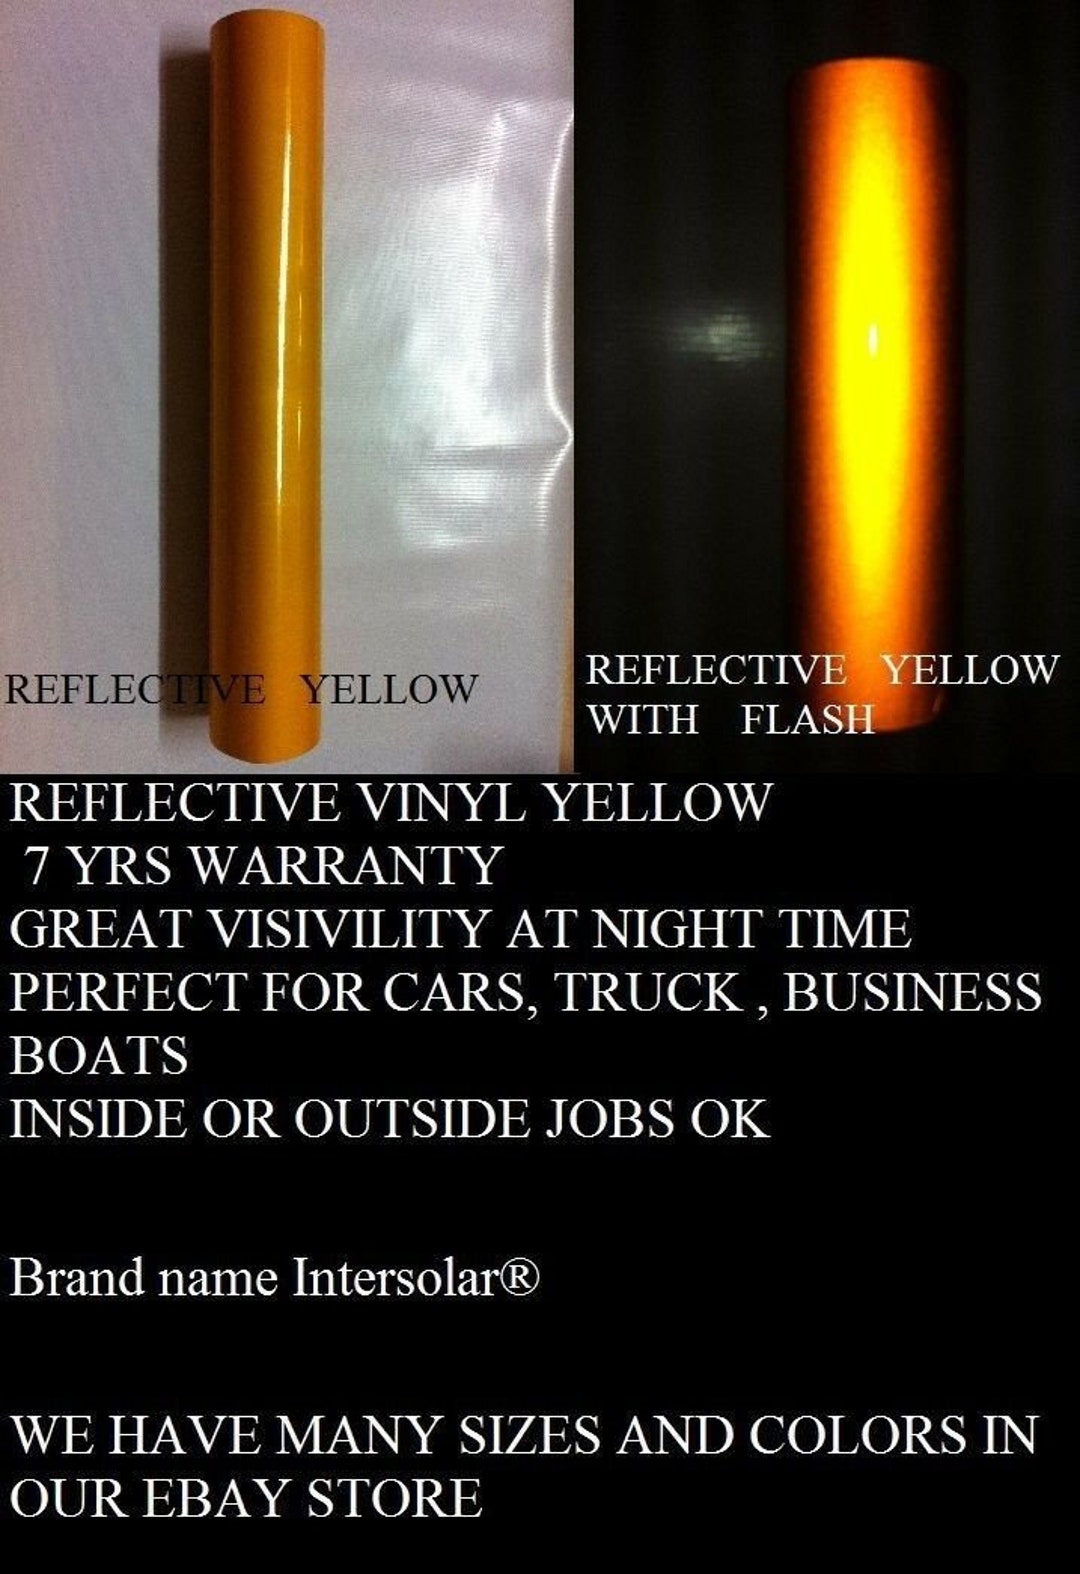 Cricut Permanent Vinyl - Stone Yellow, 12 x 15 ft, Roll